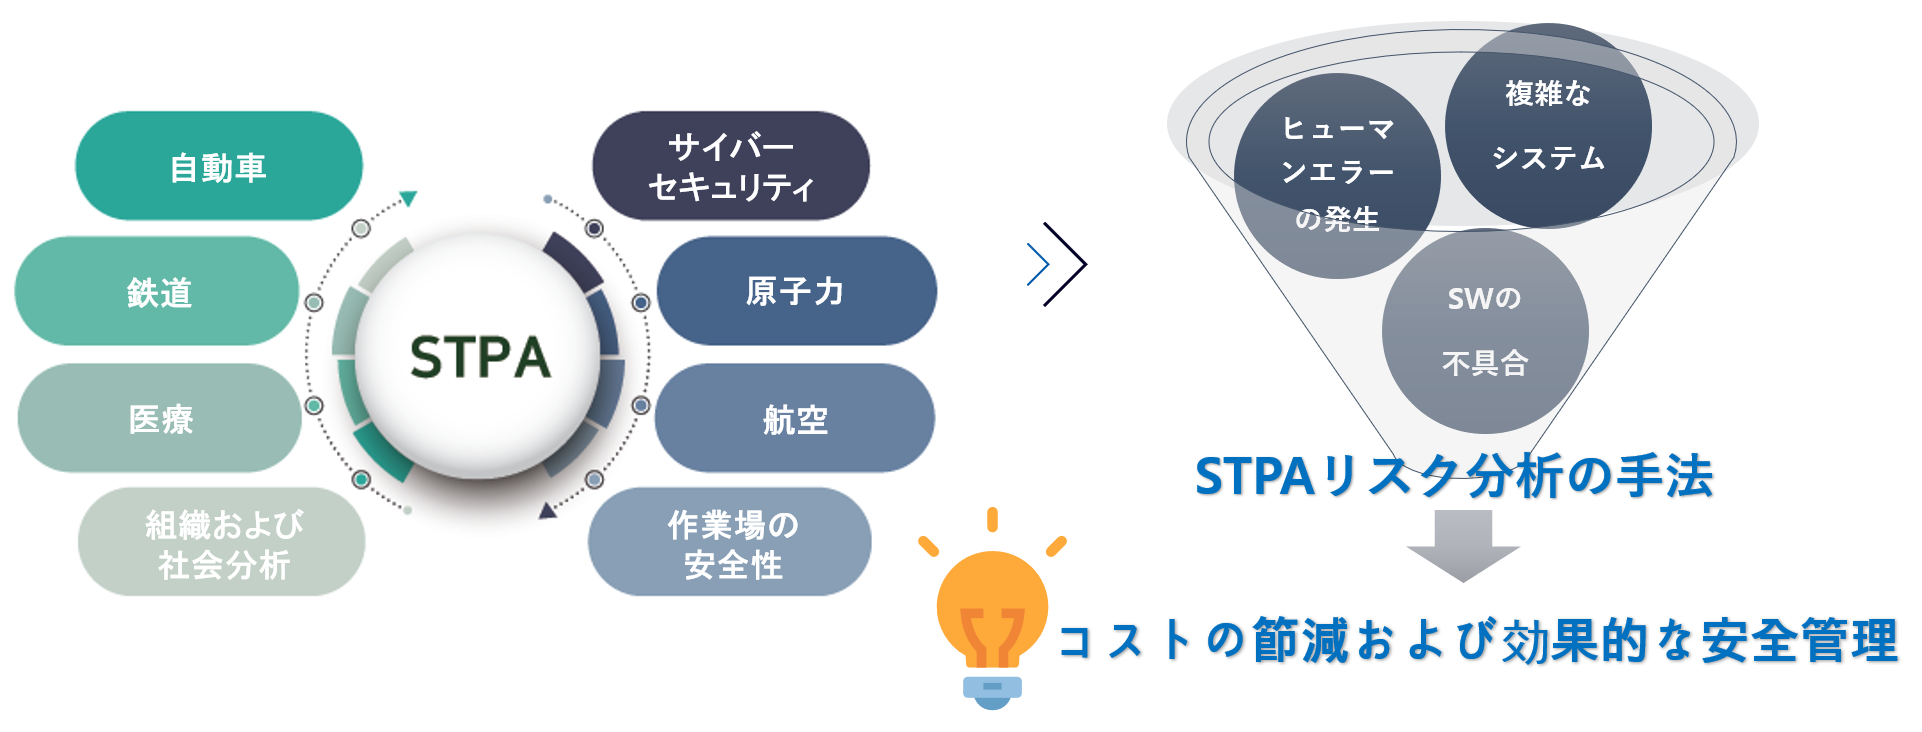 STPA(System-Theoretic Process Analysis)